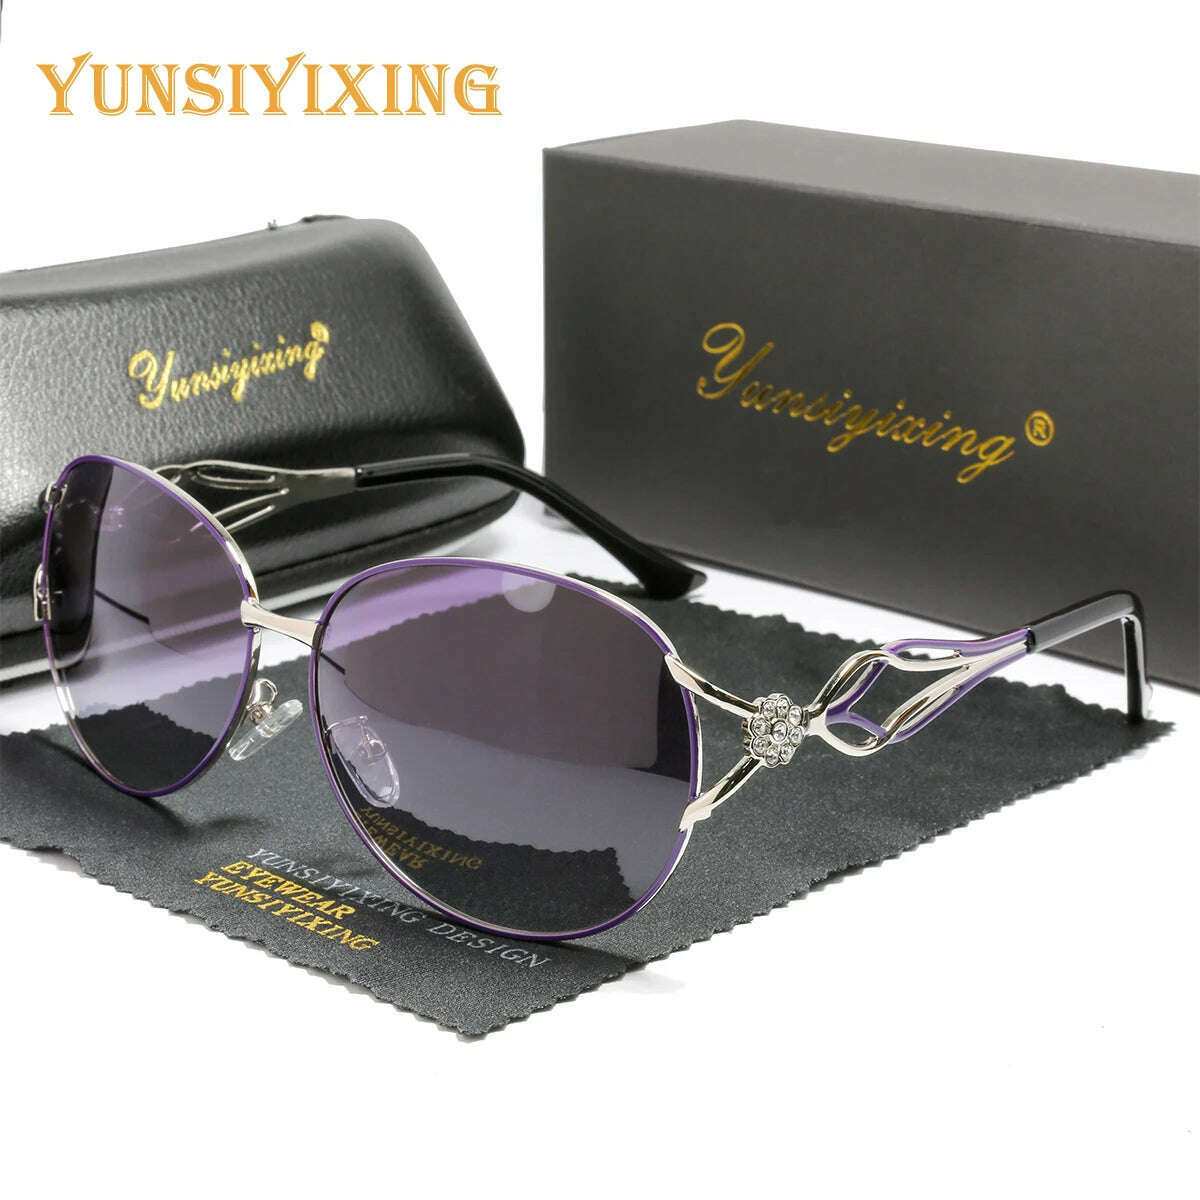 KIMLUD, YSYX Polarized Sunglasses Women Brand Butterfly Sun Glasses Luxury UV400 Driving Woman Fashion Eyewear Lunettes De oleil 2023, Purple / CHINA / Other, KIMLUD Womens Clothes